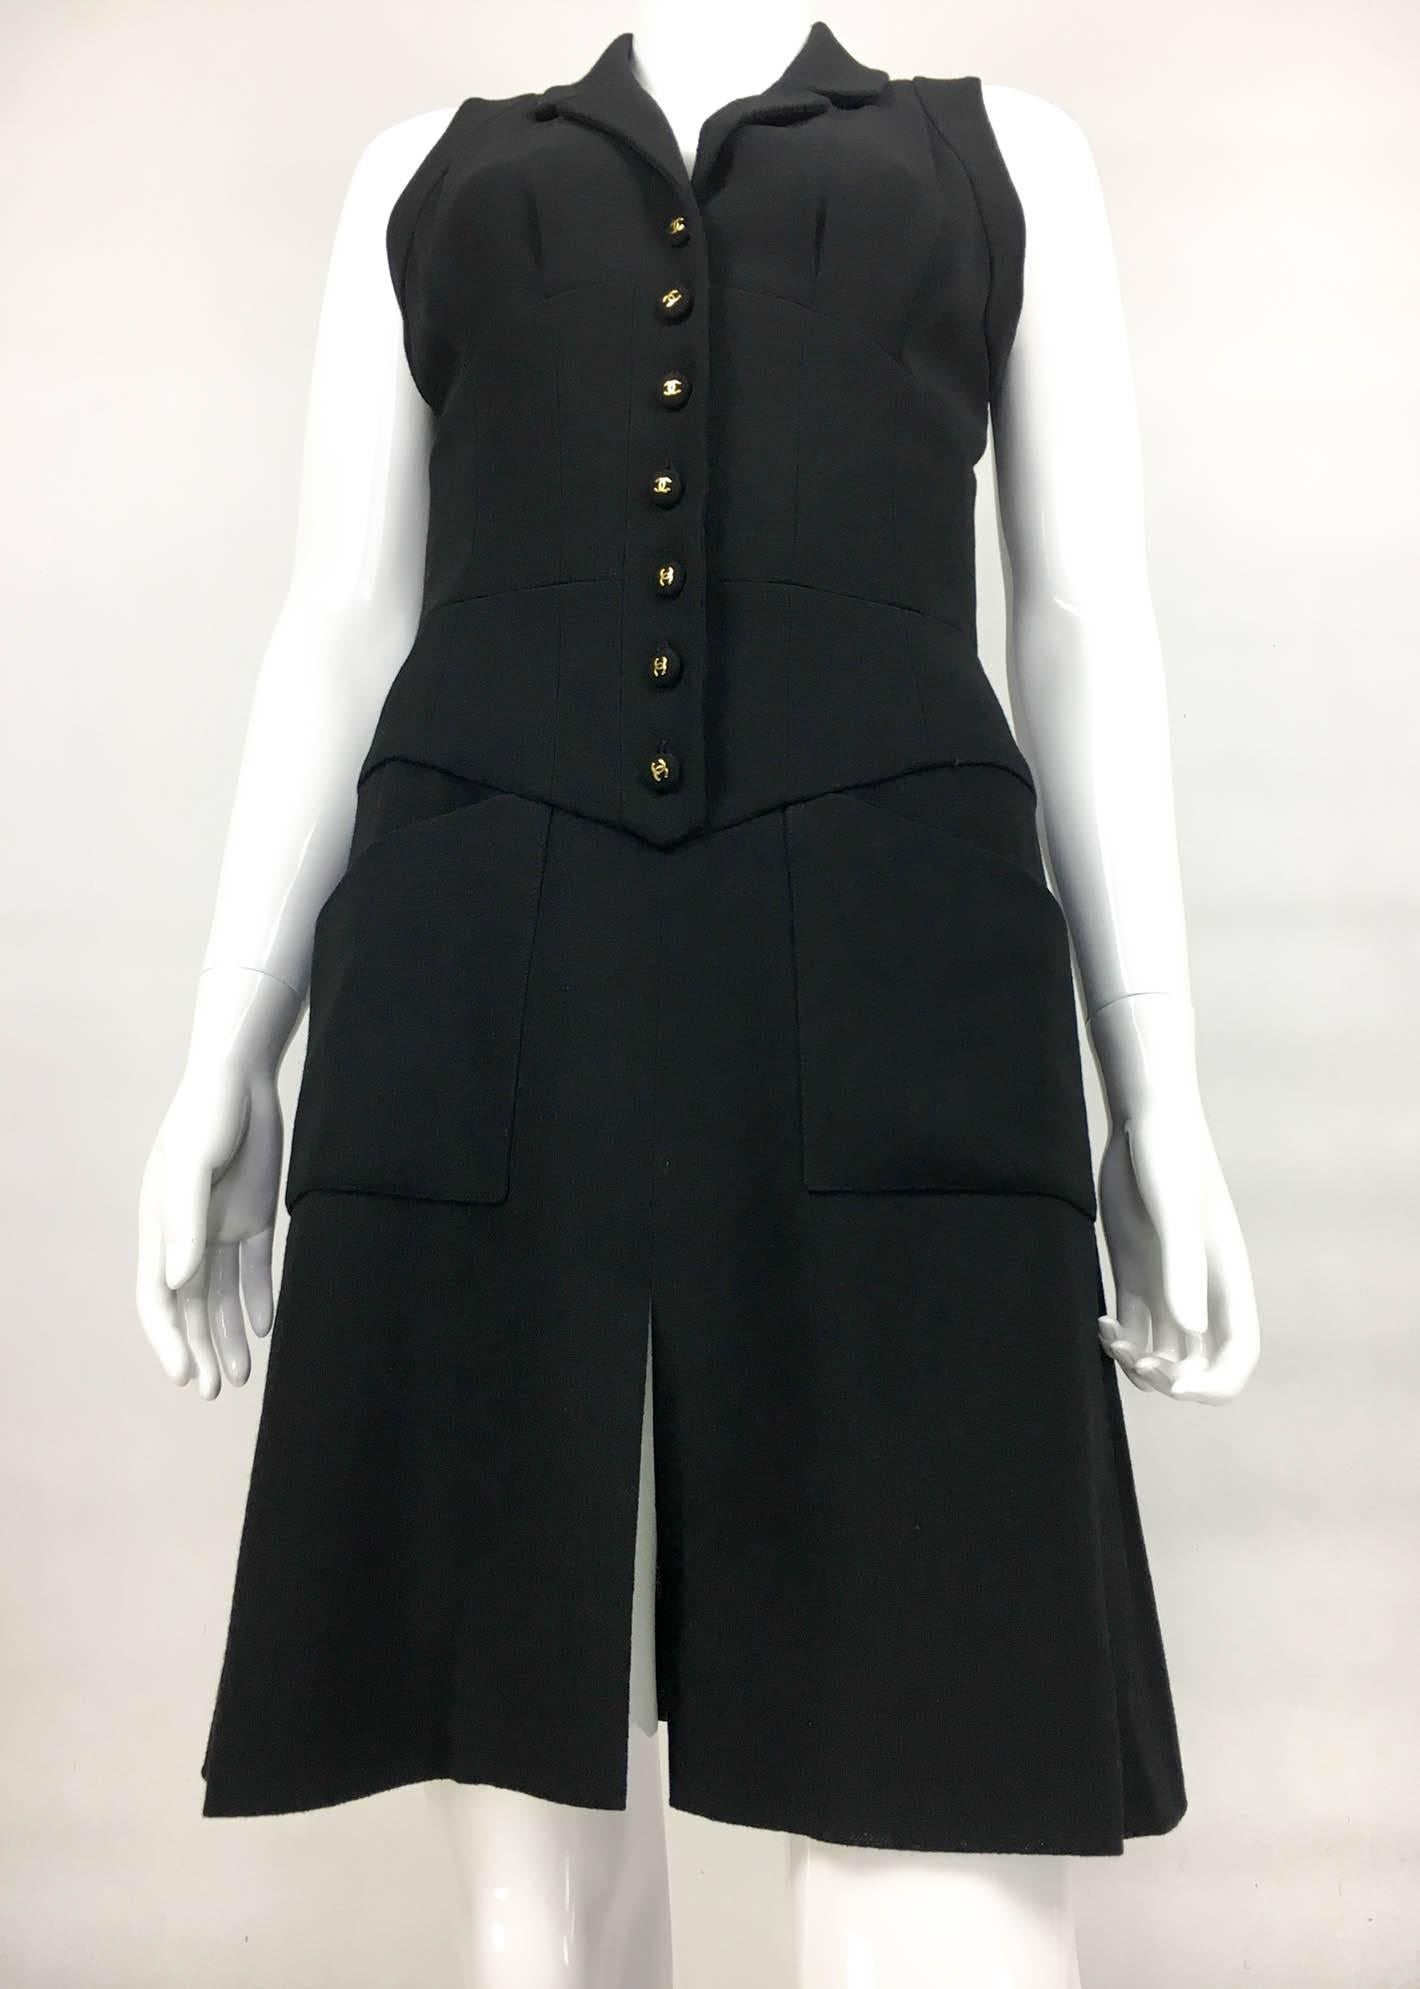 Women's Chanel Black Waistcoat-Style Wool Dress With Logo Buttons - 1990s